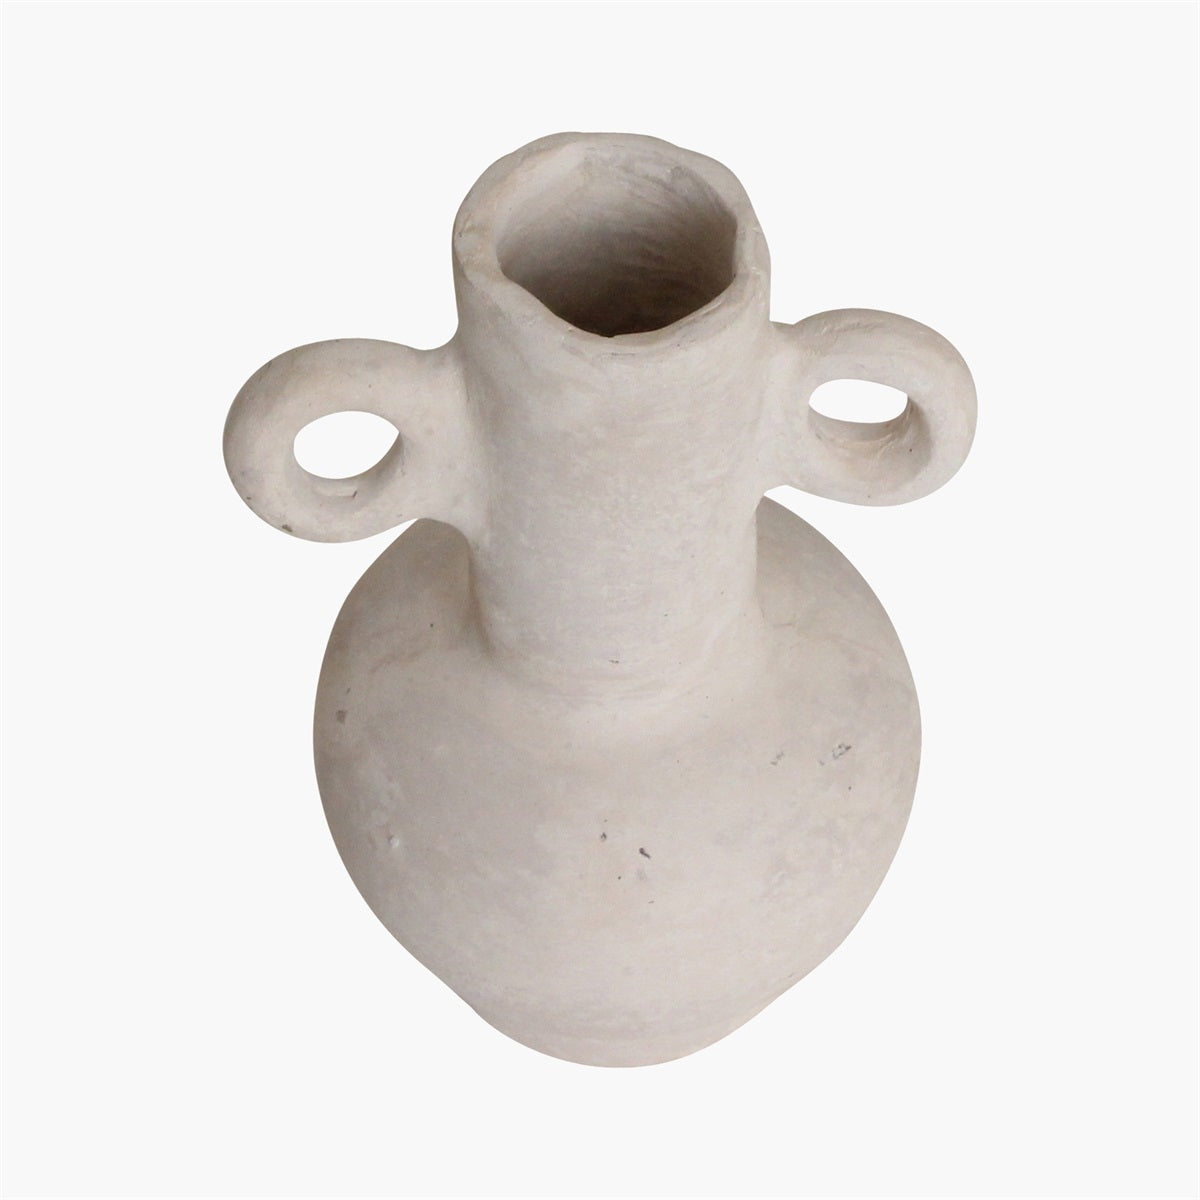 Raw Materials Chalk Vase Osian White Papermache and Chalkpowder